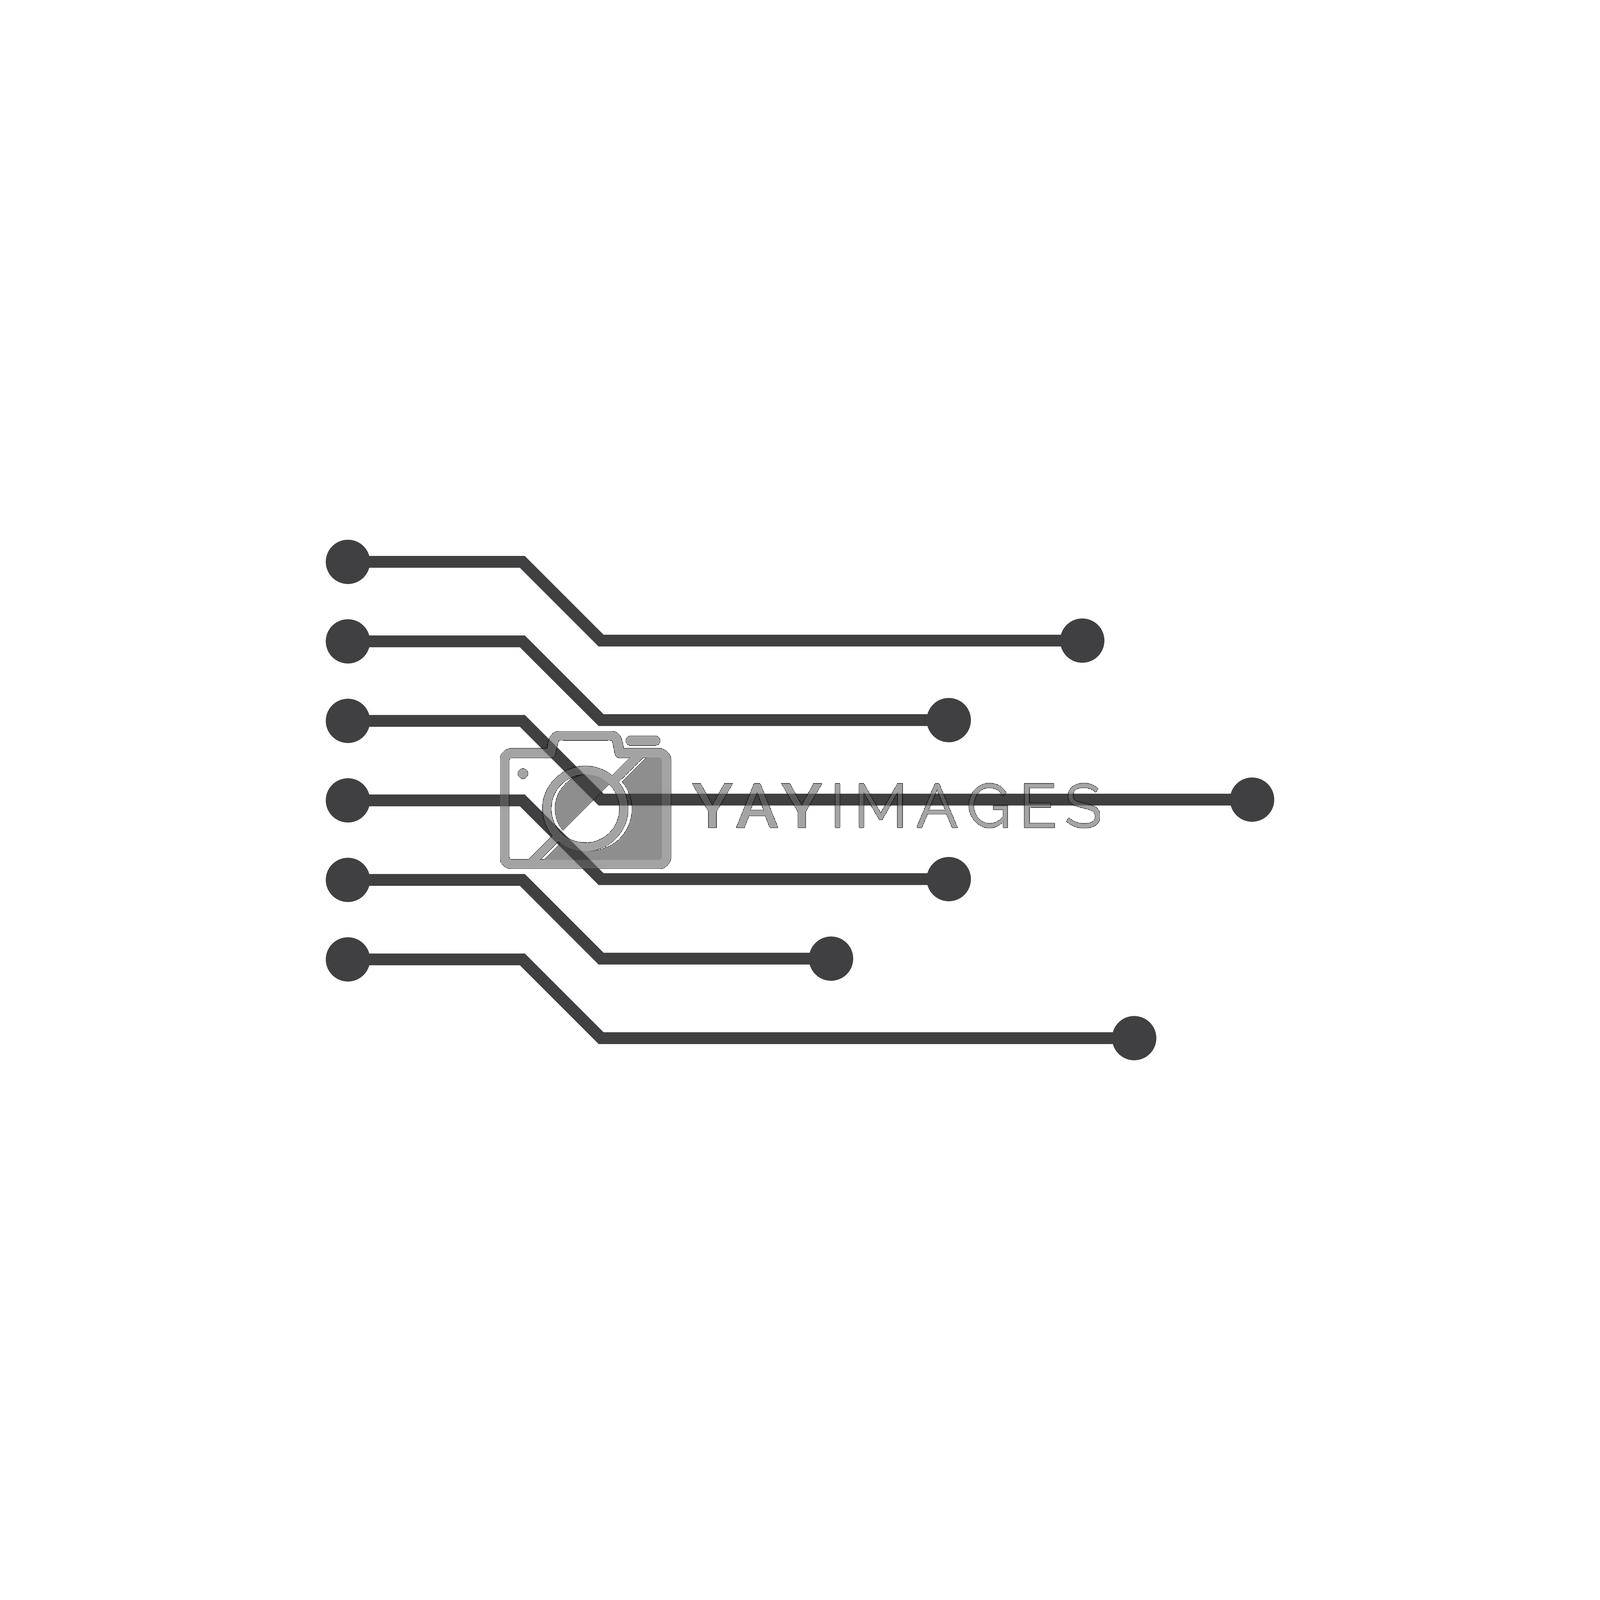 Circuit technology logo vector template